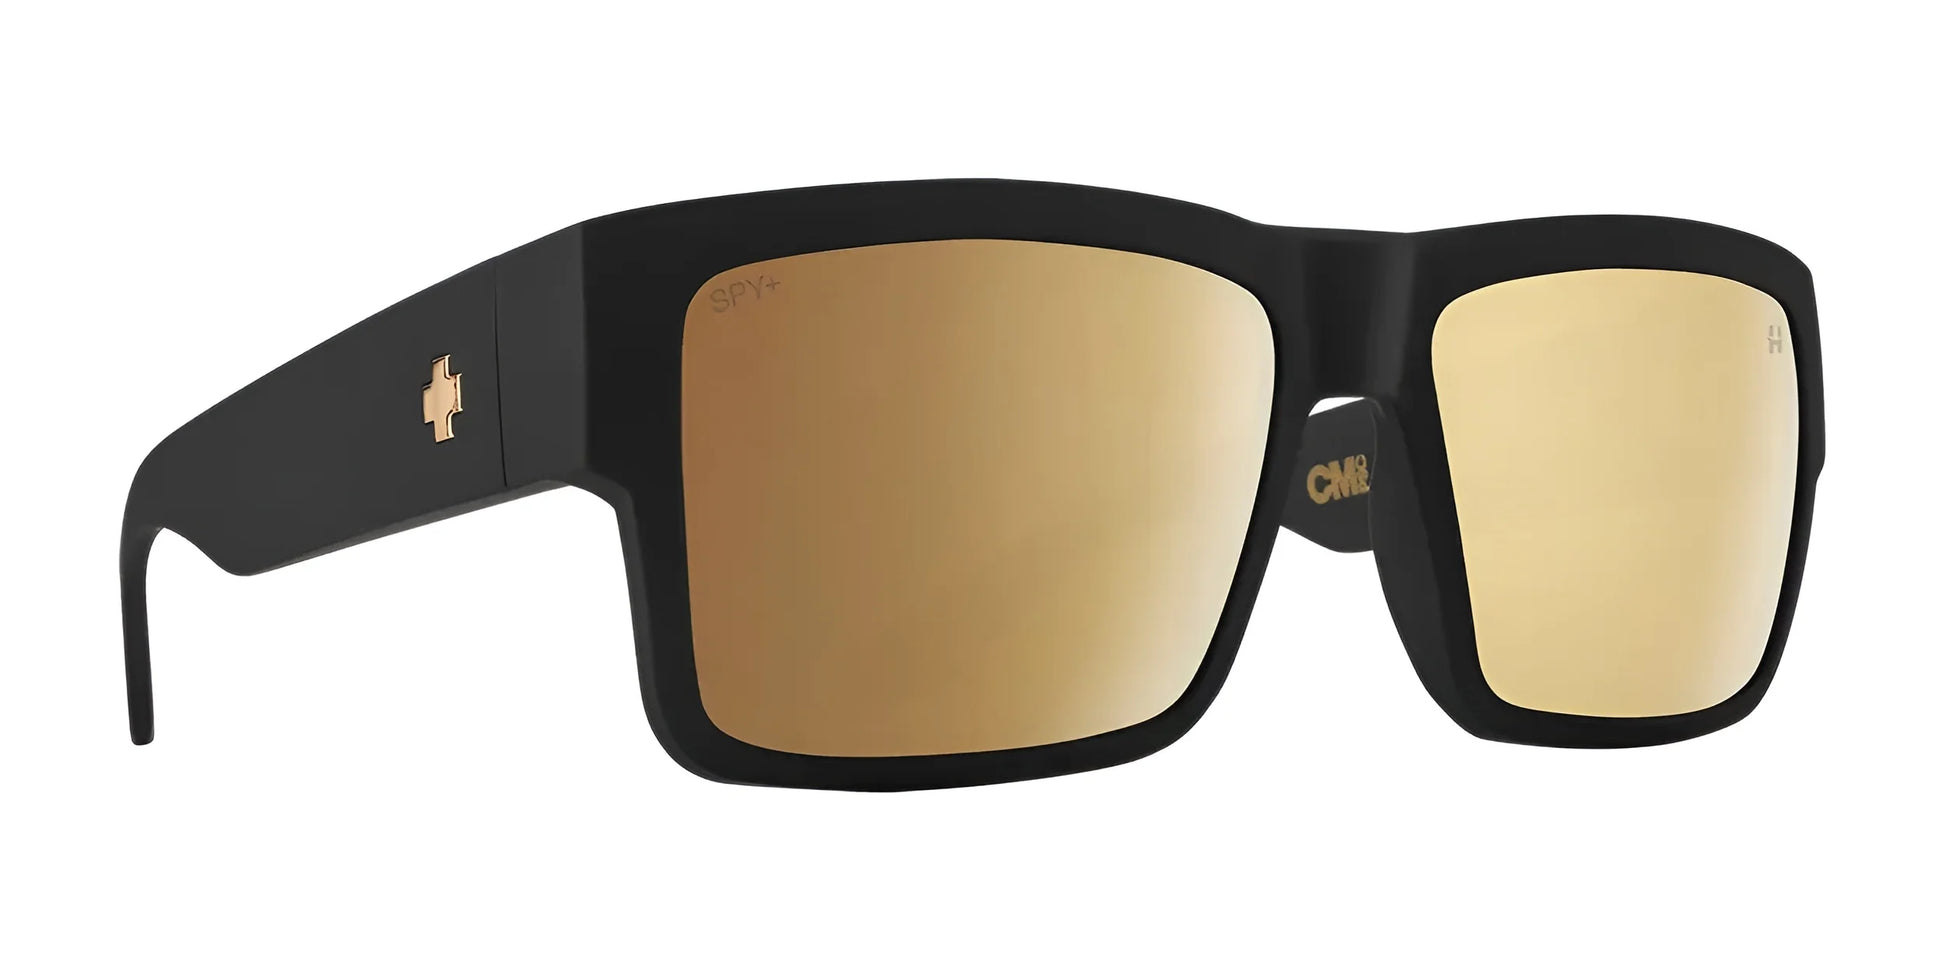 SPY CYRUS Sunglasses Soft Matte Black / Happy Bronze Gold Spectra Mirror